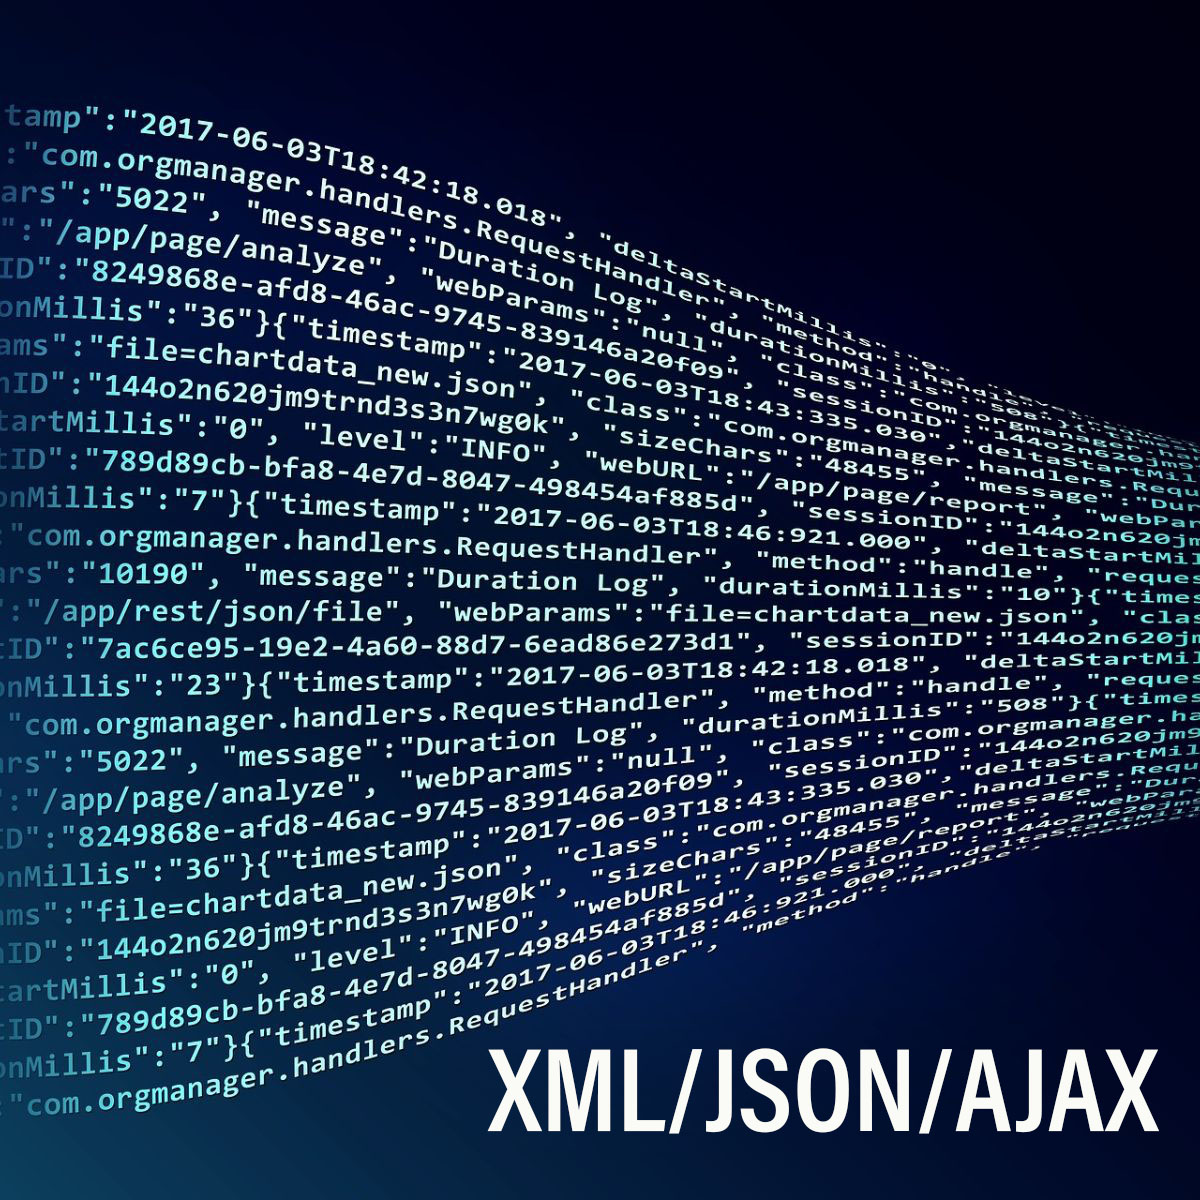 XML/JSON/AJAX